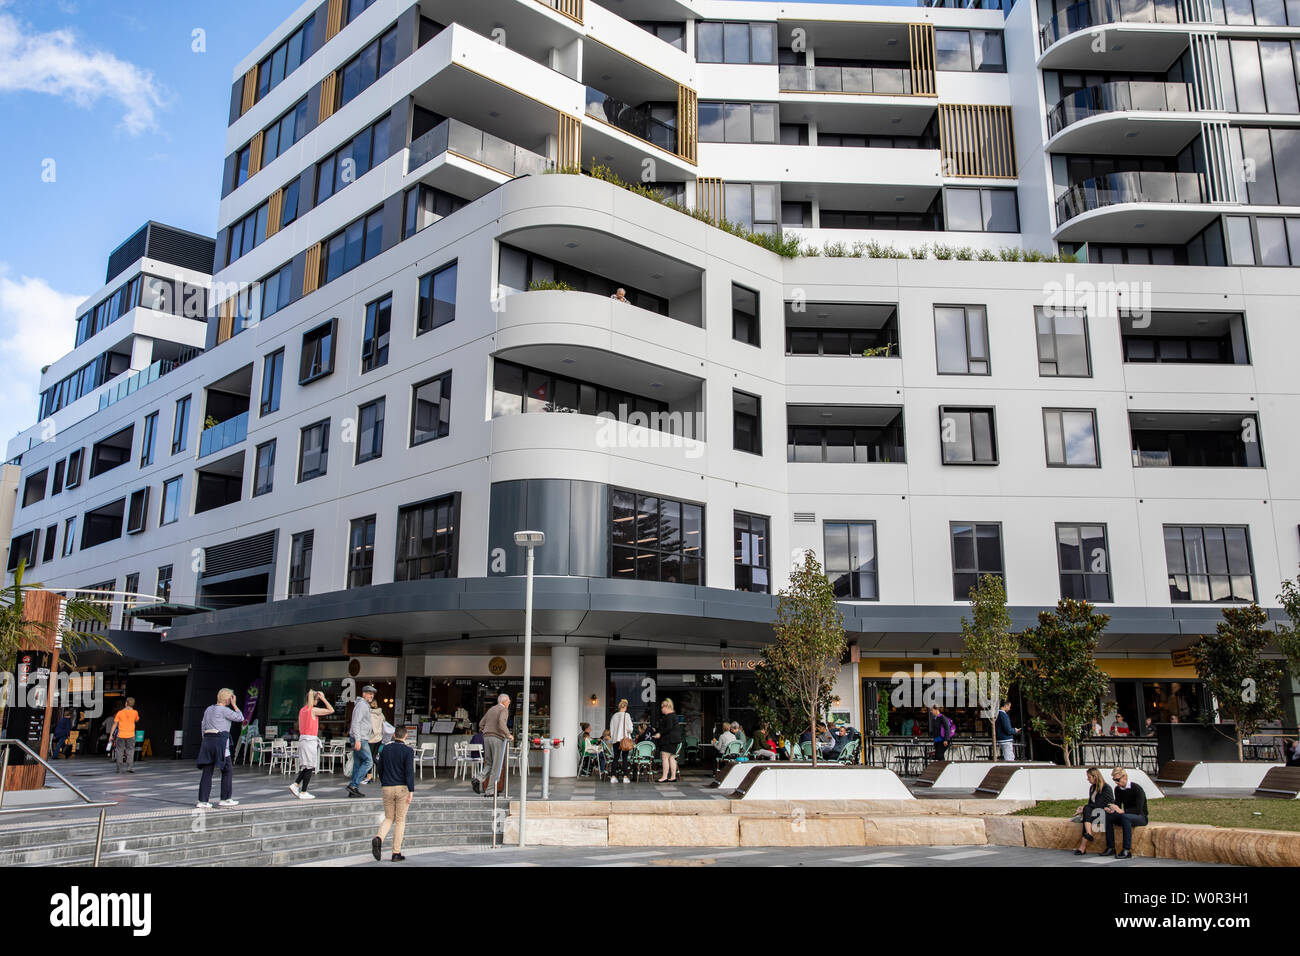 Meriton Dee Why urban regeneration development with new high rise apartment living and retail precinct, Sydney northern beaches,Australia Stock Photo